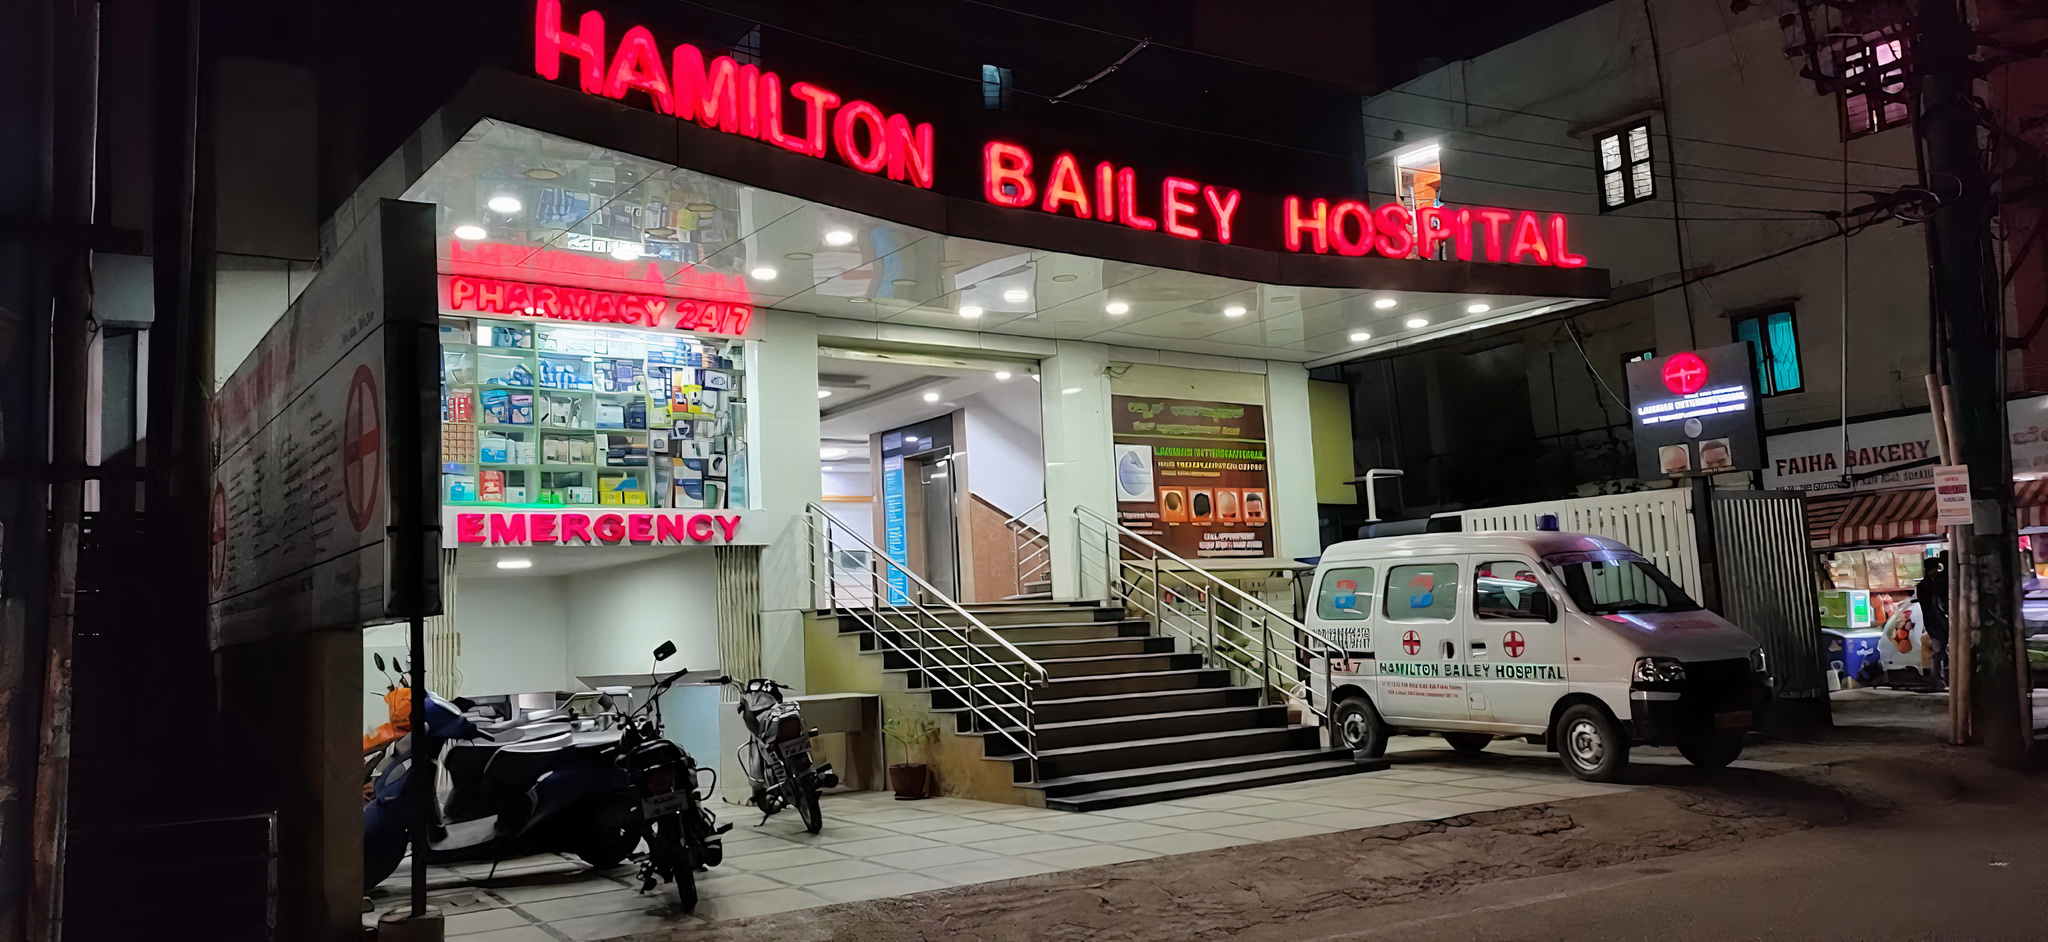 Hamilton Bailey Hospital